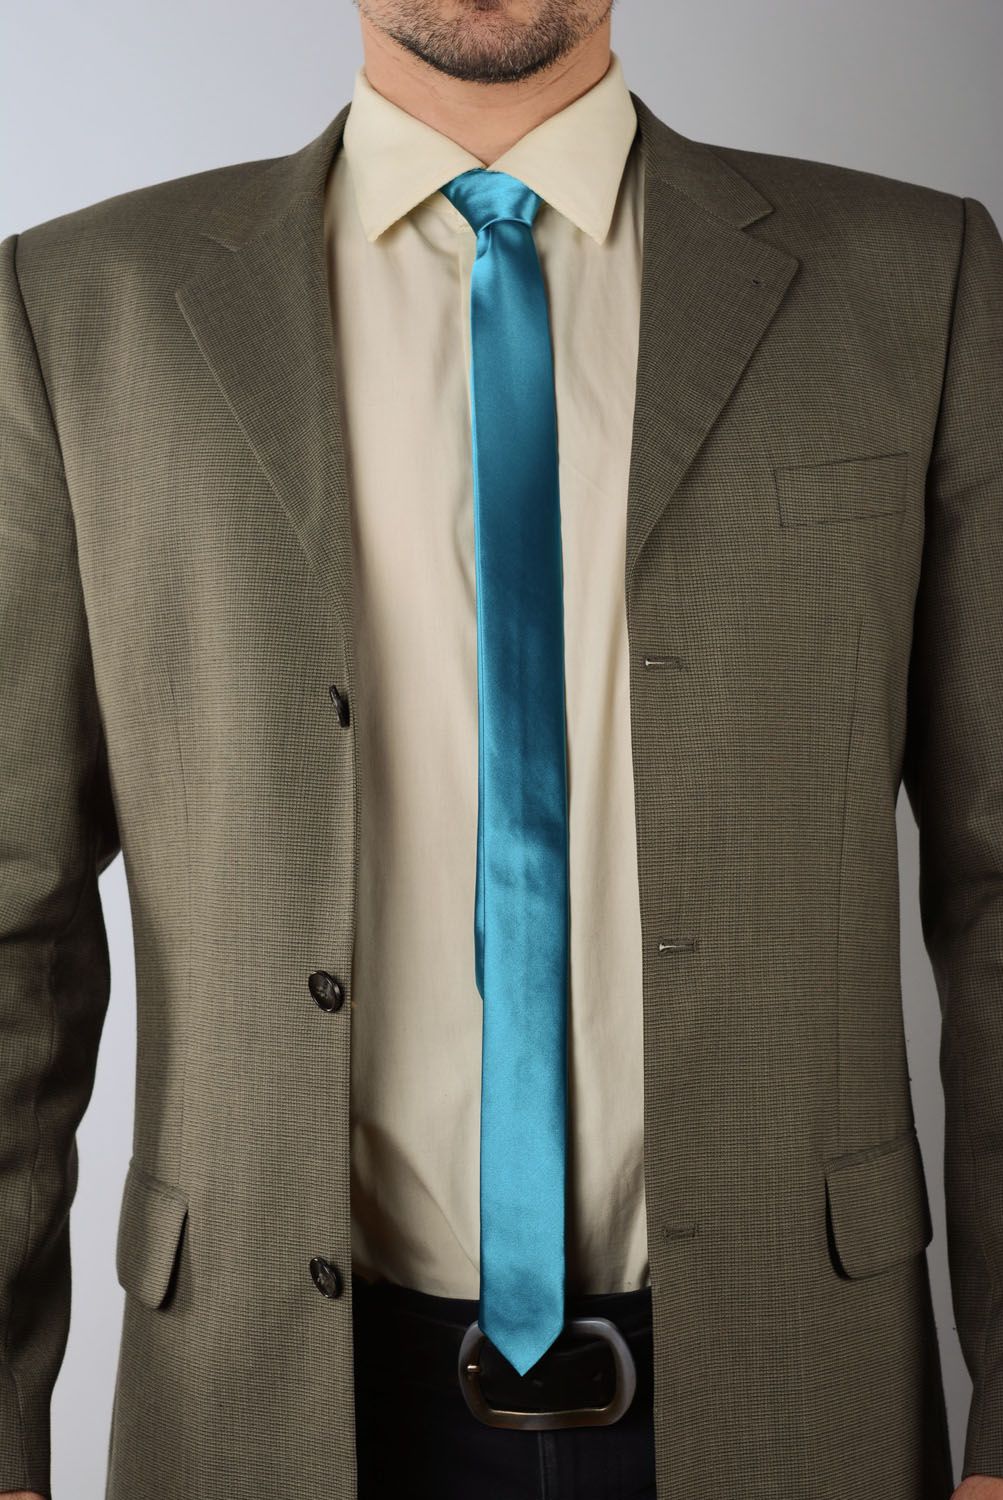 Cravate en gabardine bleu clair faite main photo 1